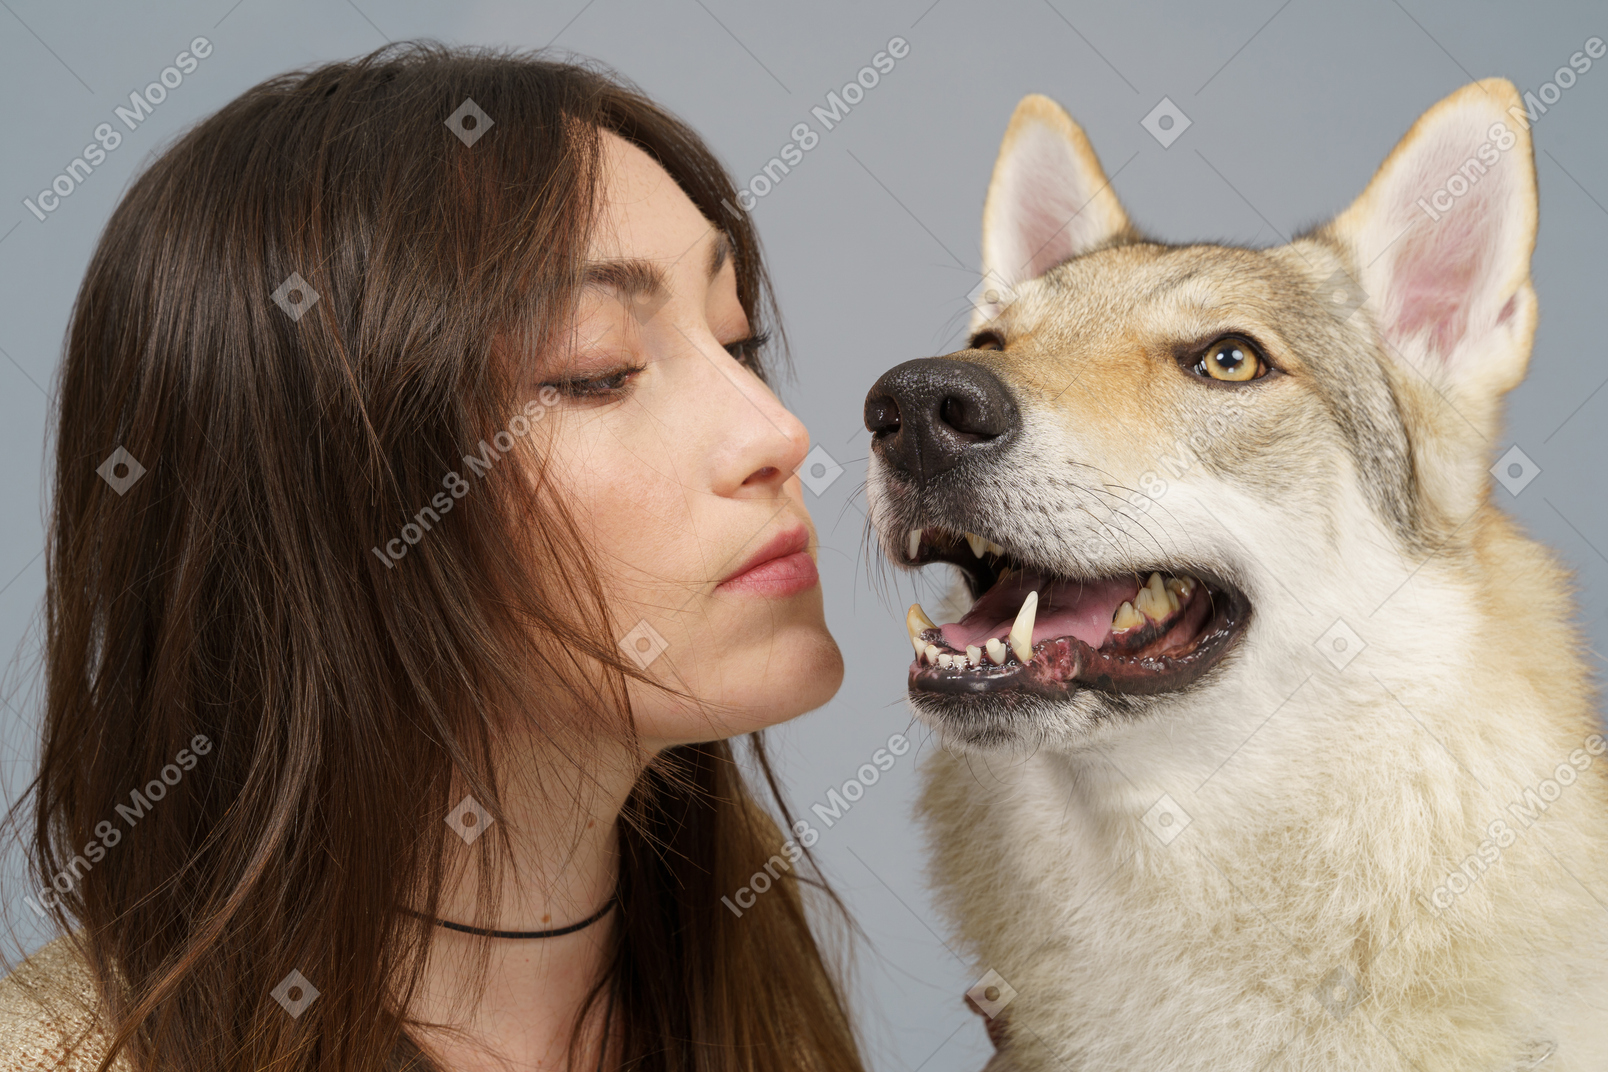 Крупный план хозяйки, целующей ее собаку